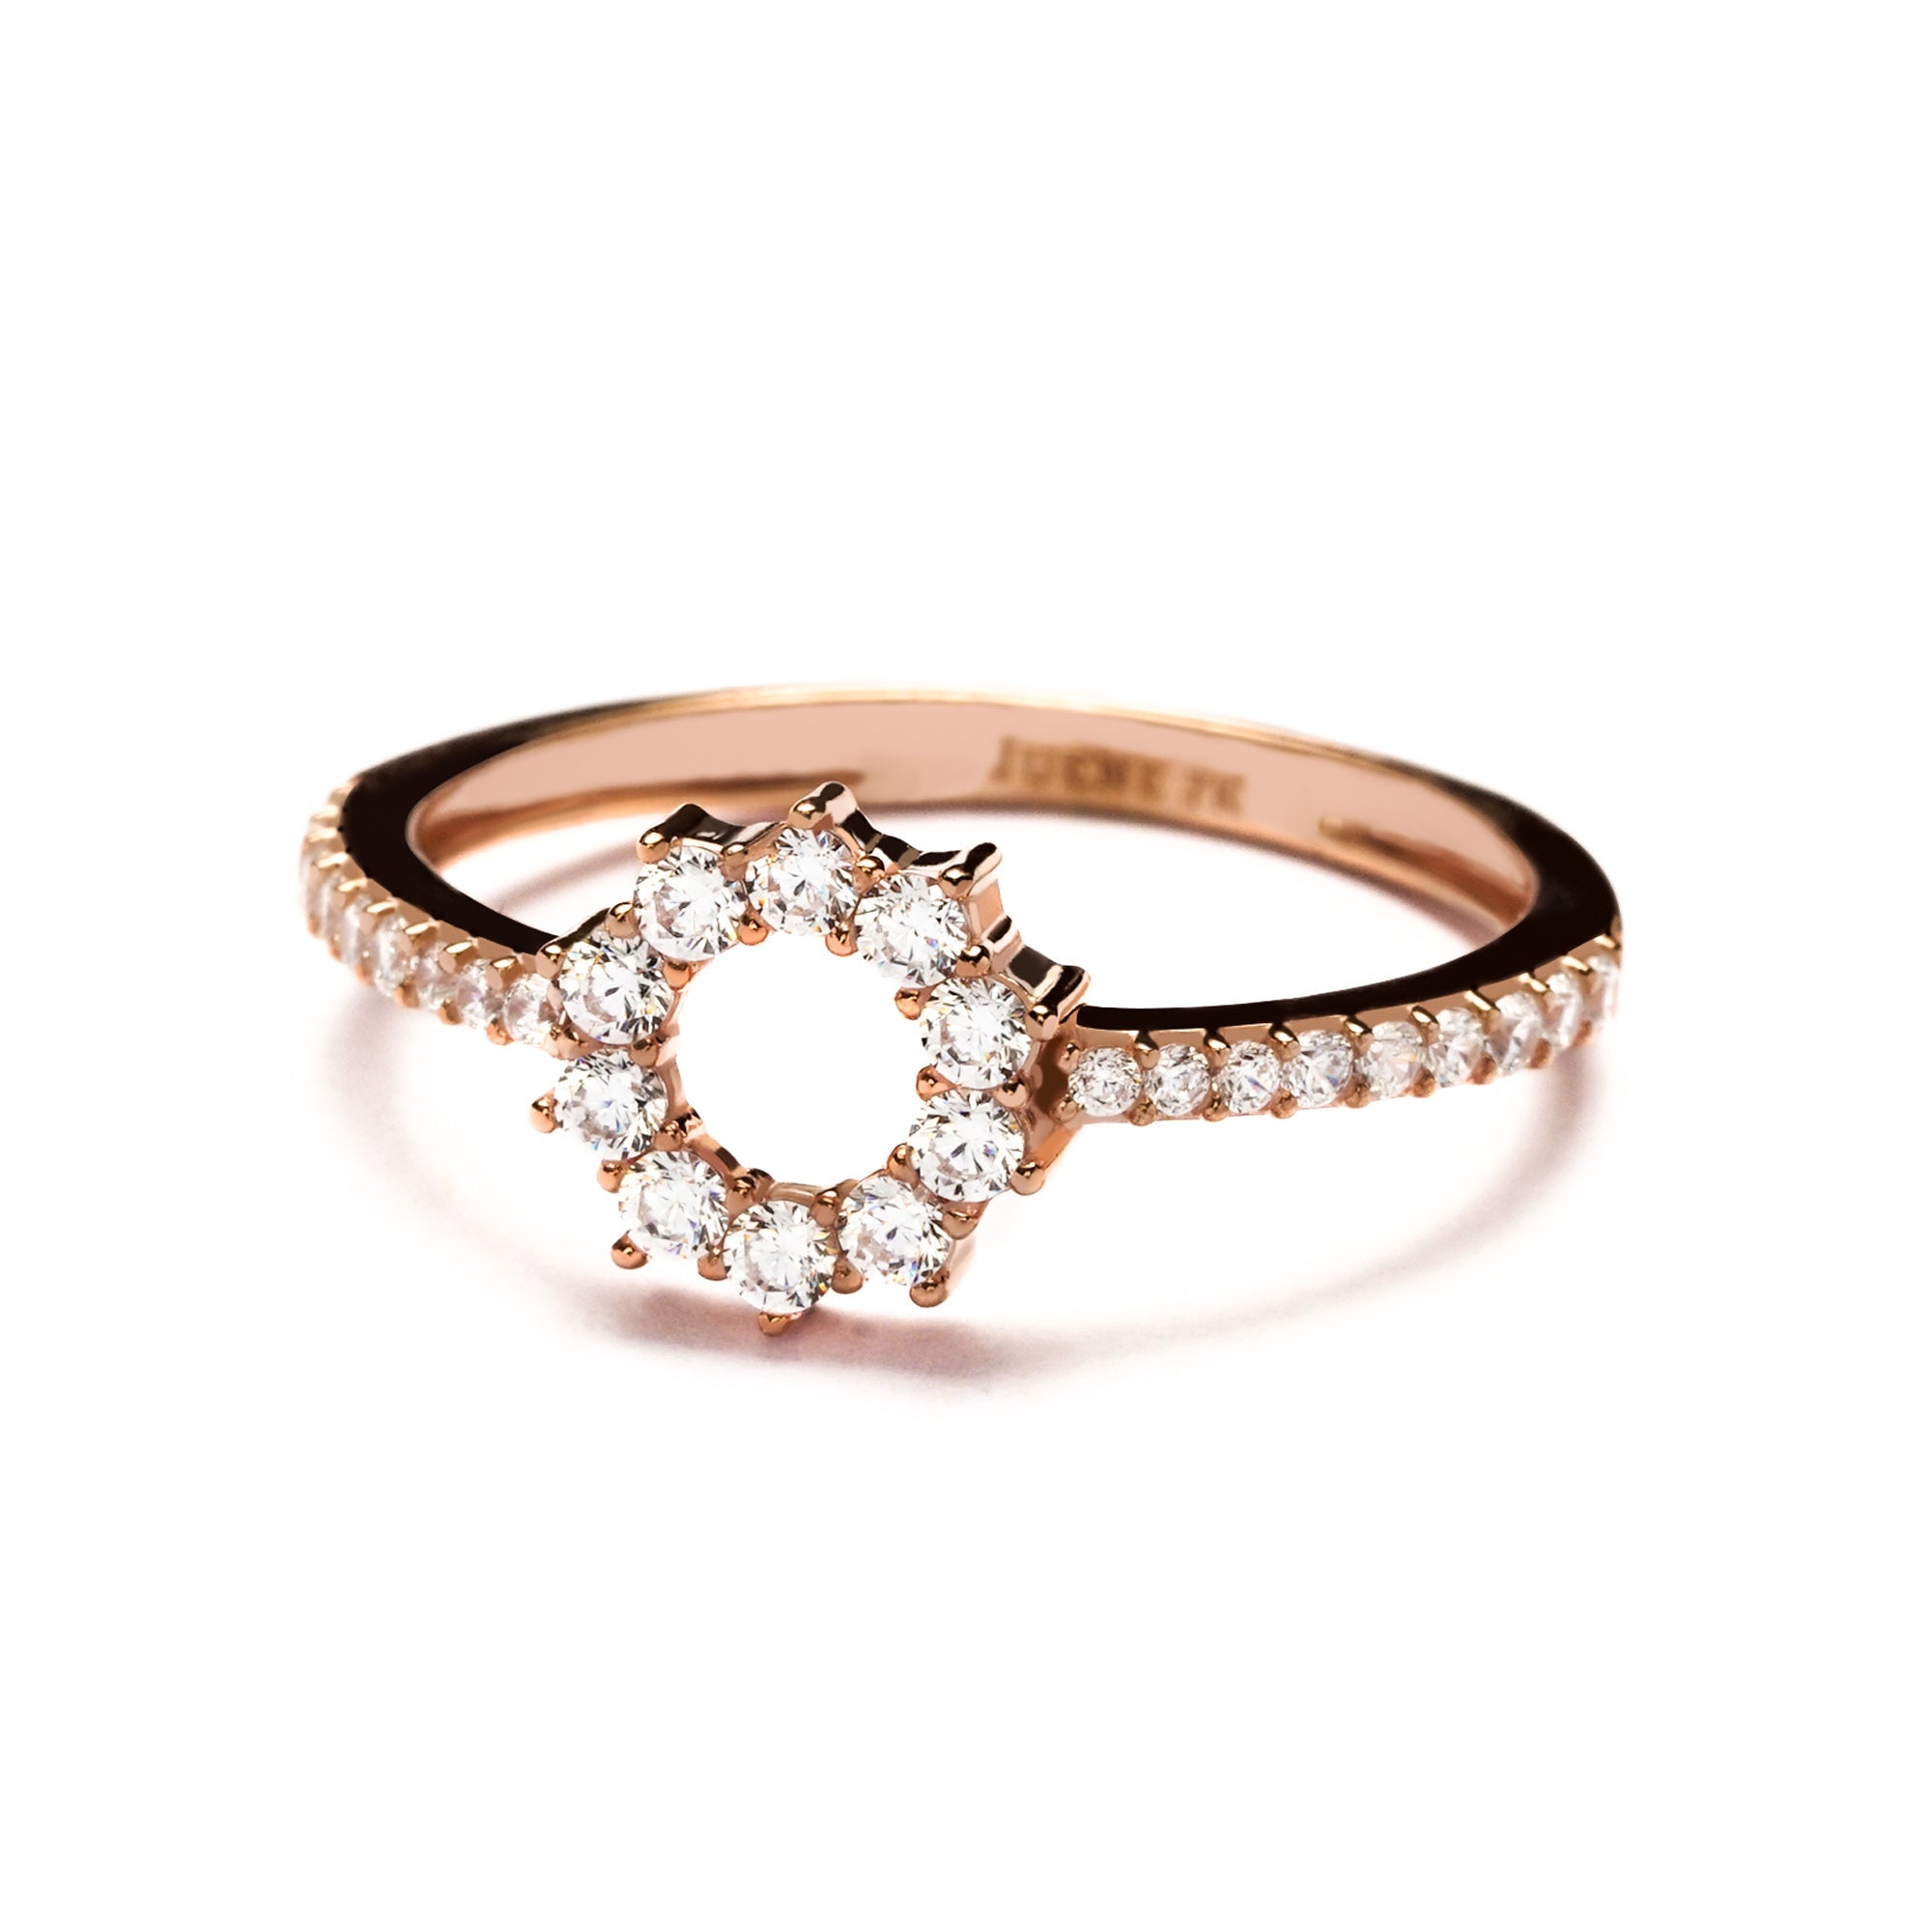 Emilia Gold Ring - Radiance - Juene Jewelry